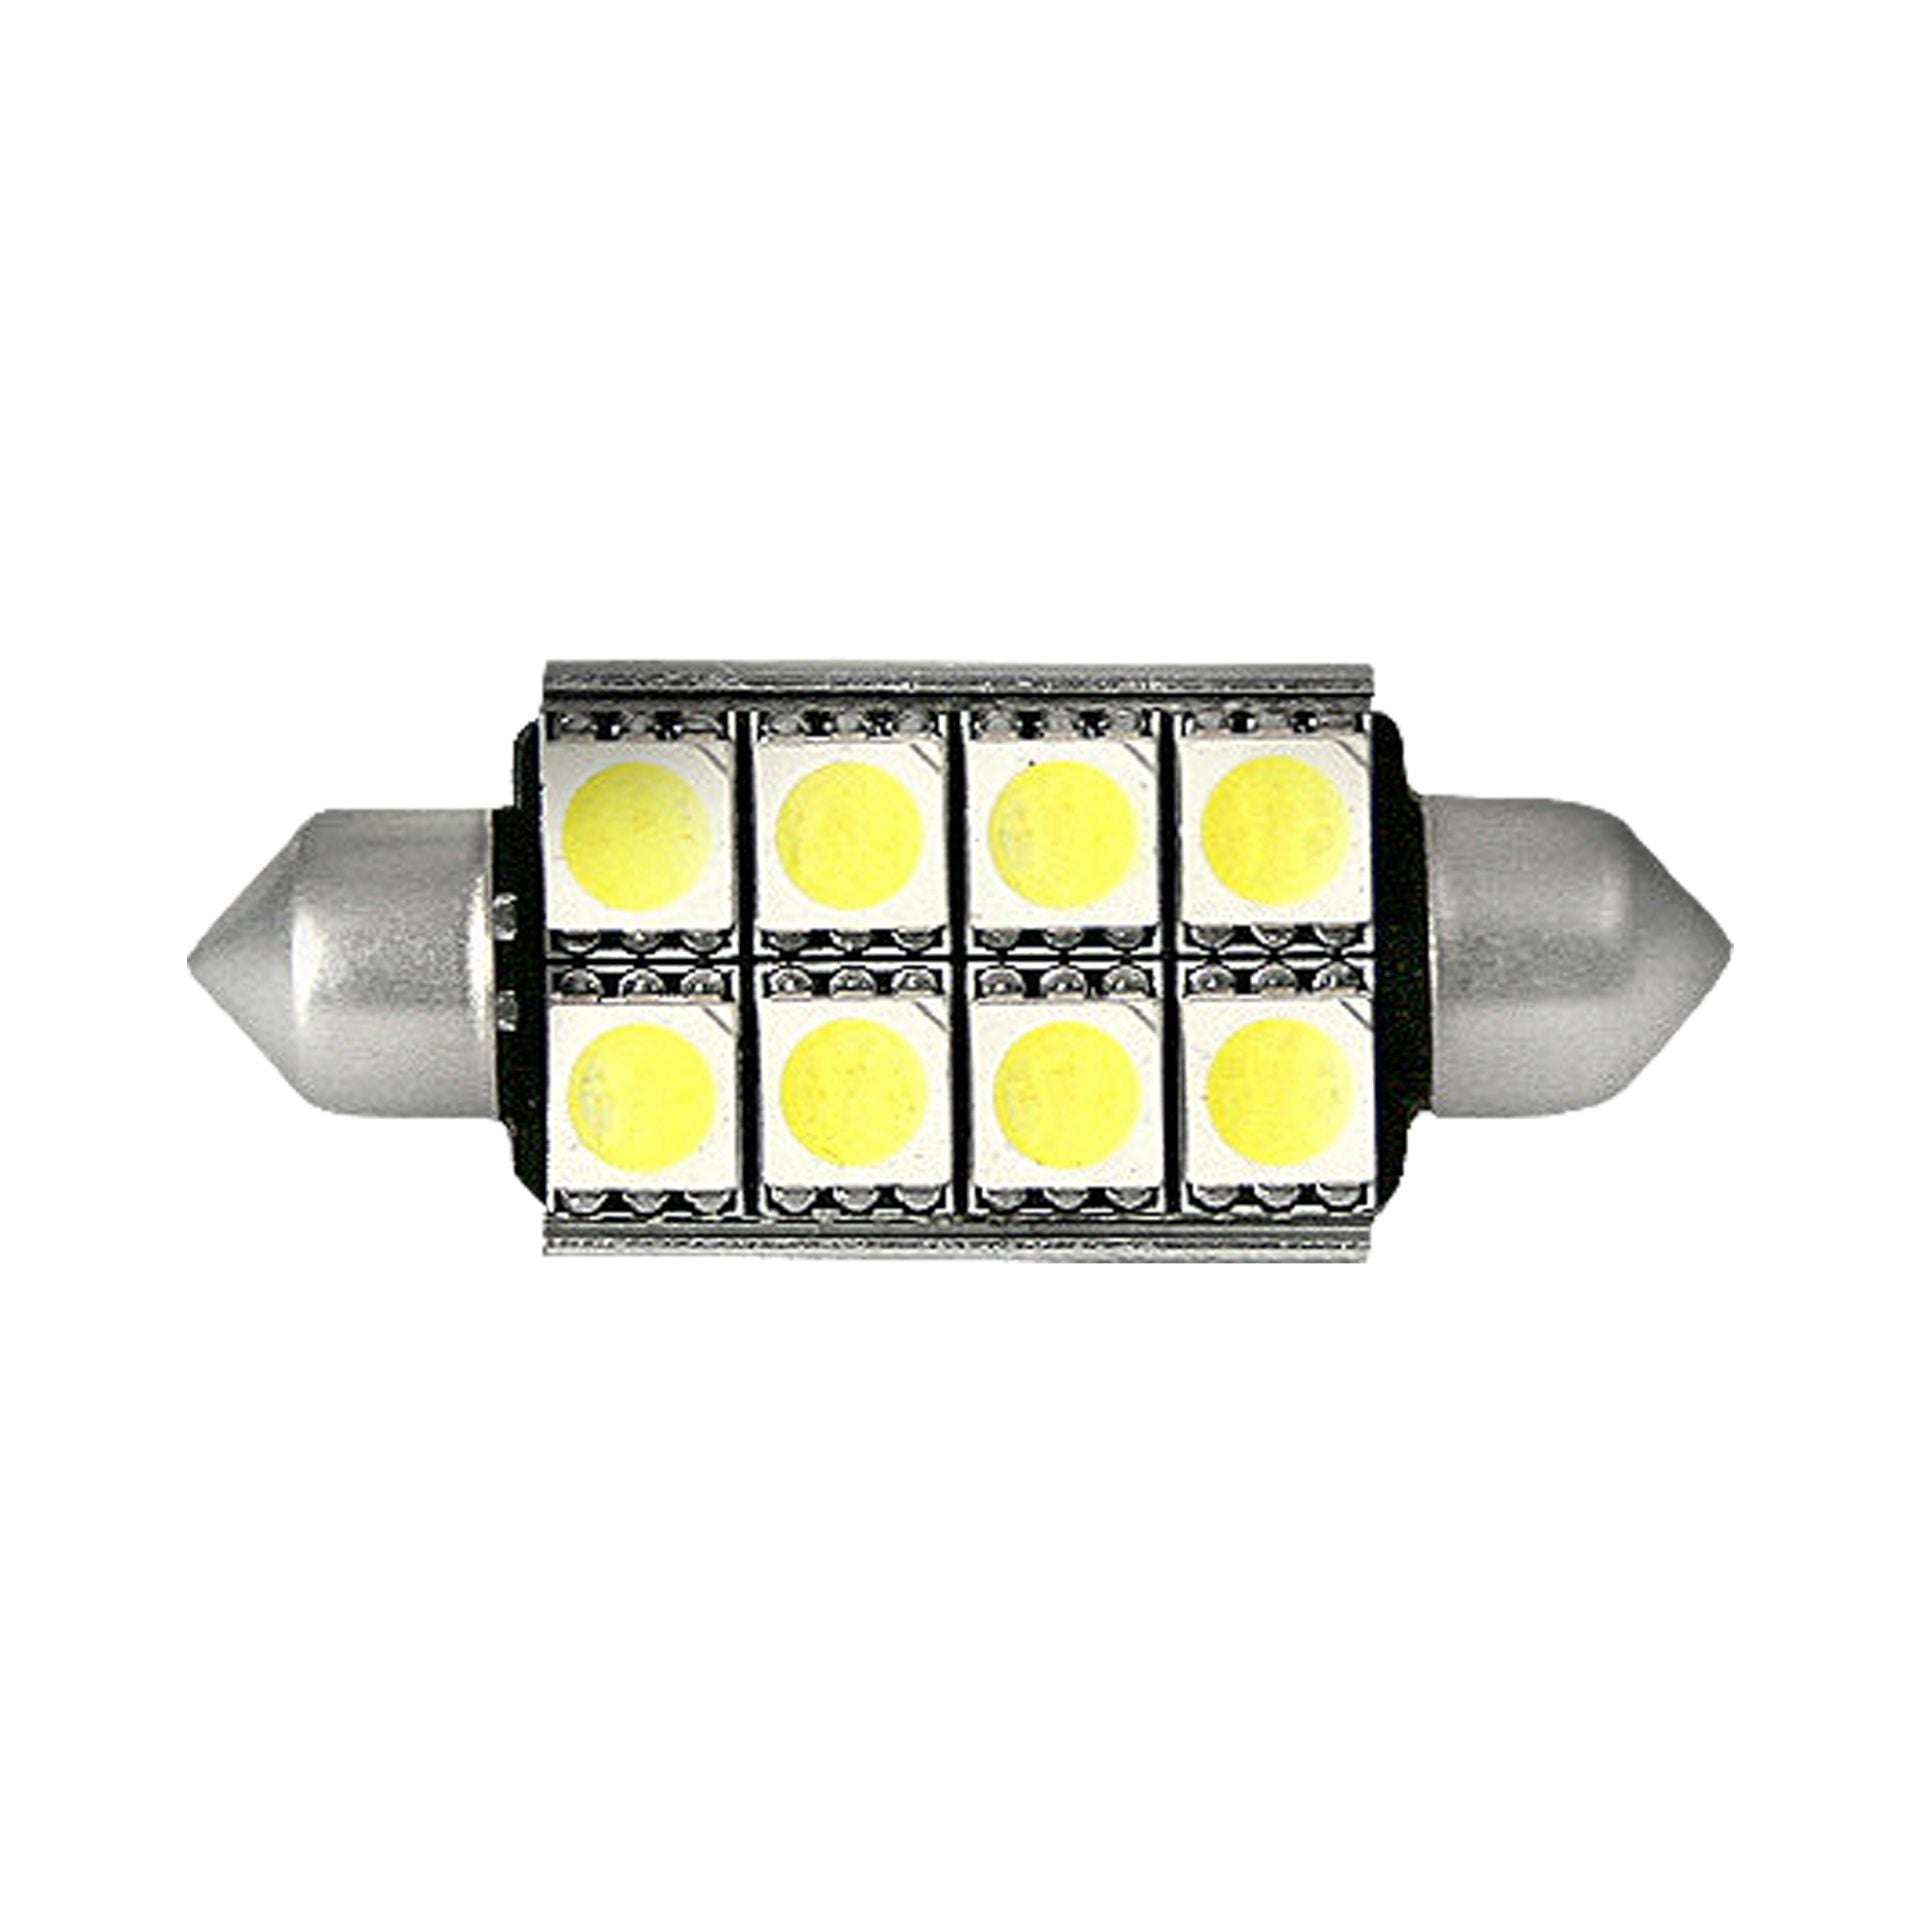 578/364 10mm x 42mm Canbus Festoon Ultra-High Power 3-Watt SMD 8 LED Bulb